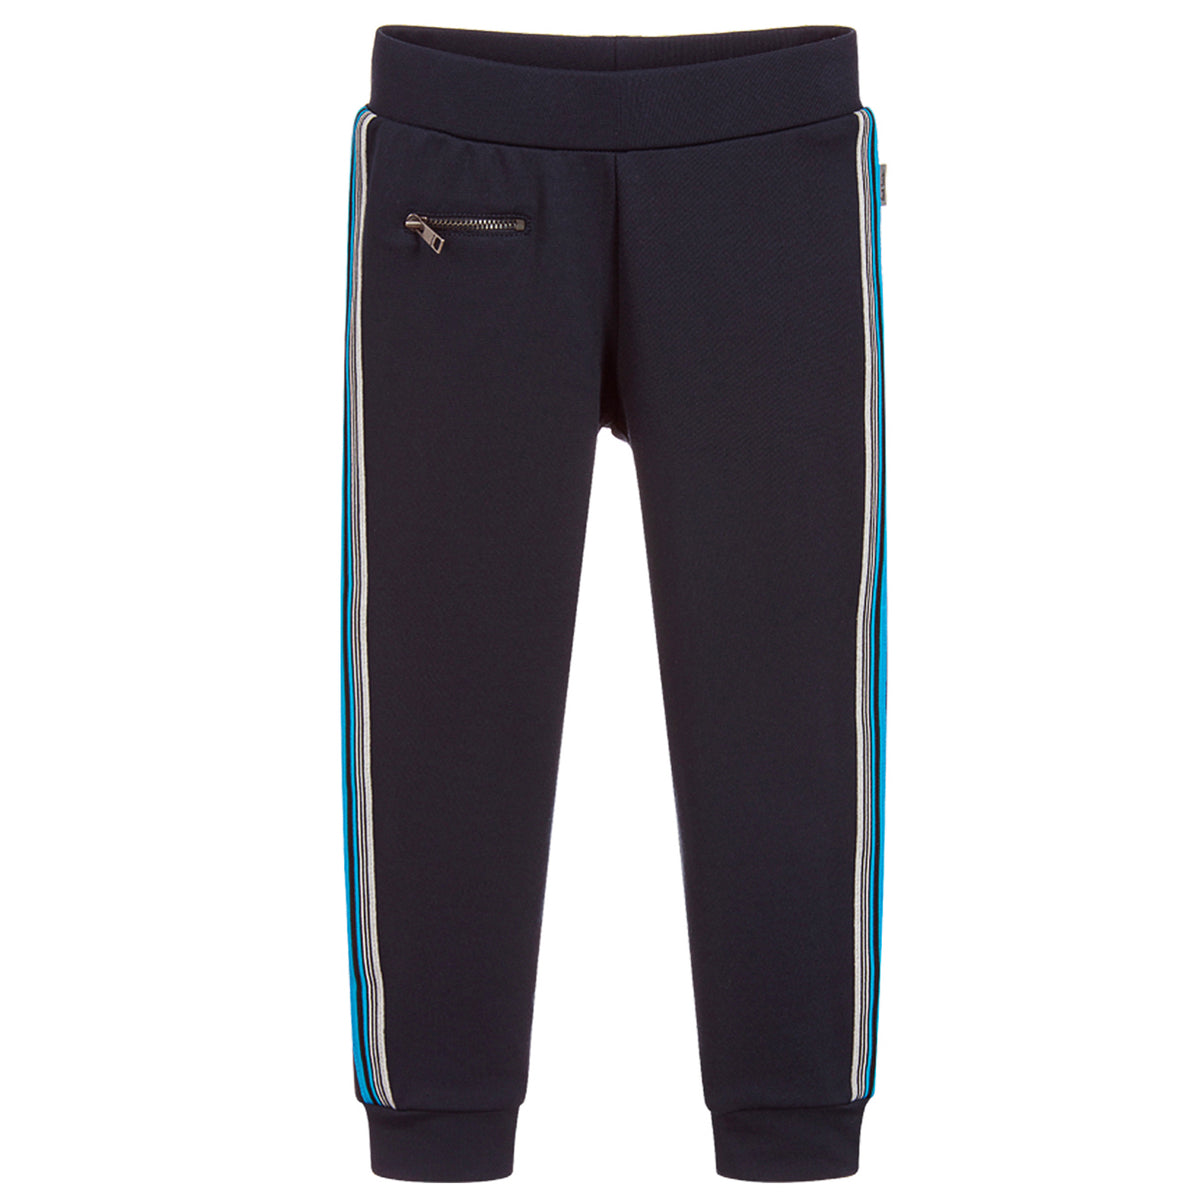 Boys Adidas Track Pants Size L 14/16 Black Athletic EUC Condition | eBay